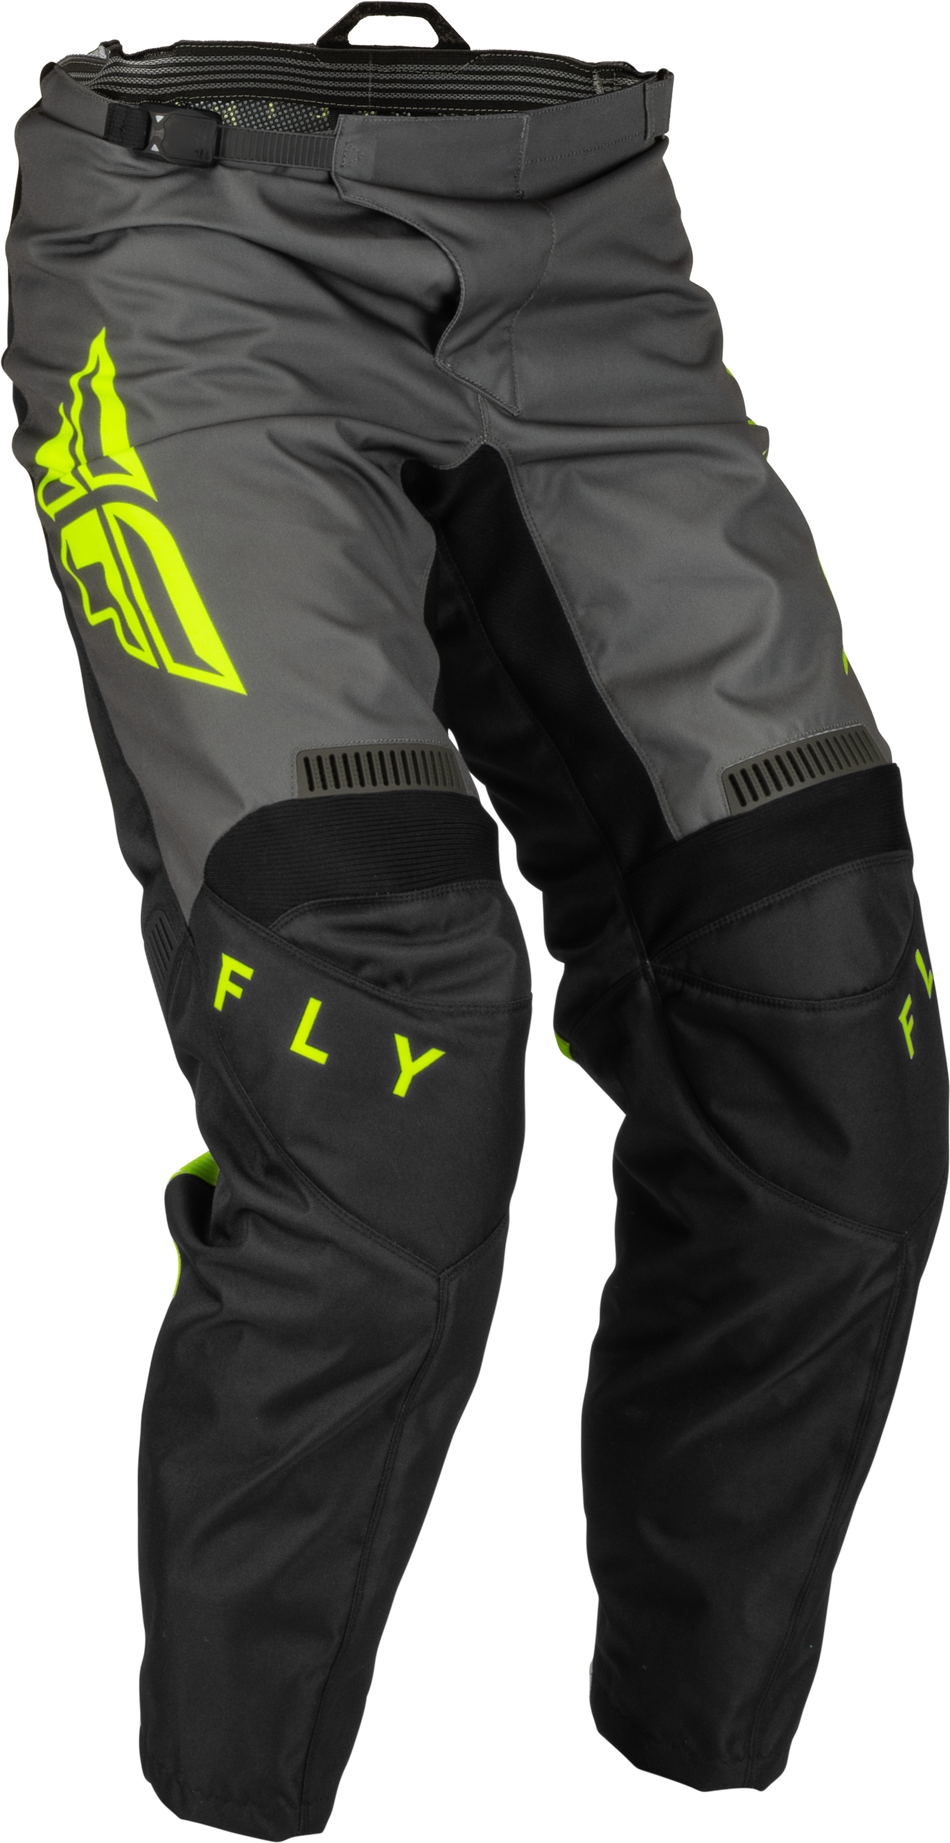 FLY RACING F-16 Pants Black/Grey/Hi-Vis Sz 32 376-93032